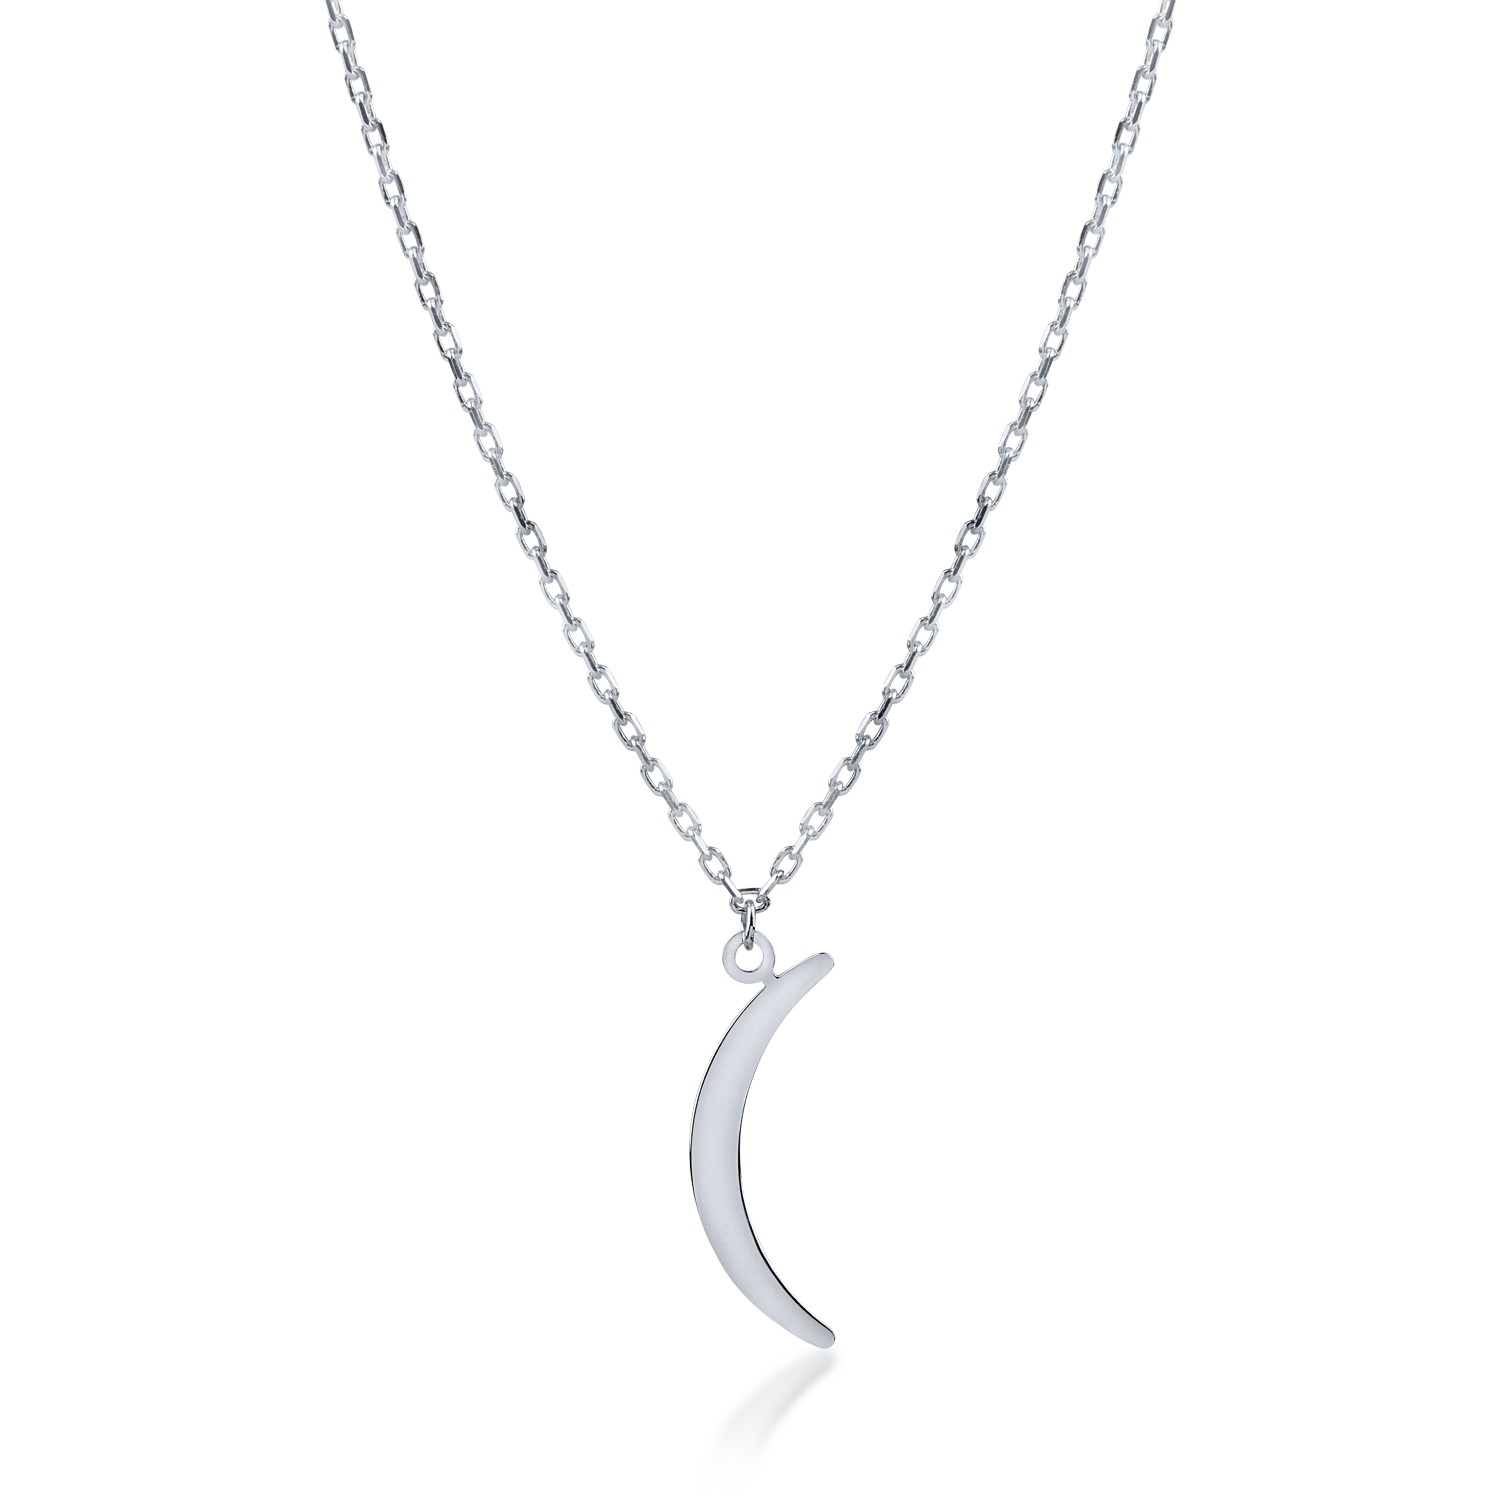 White gold half-moon pendant necklace